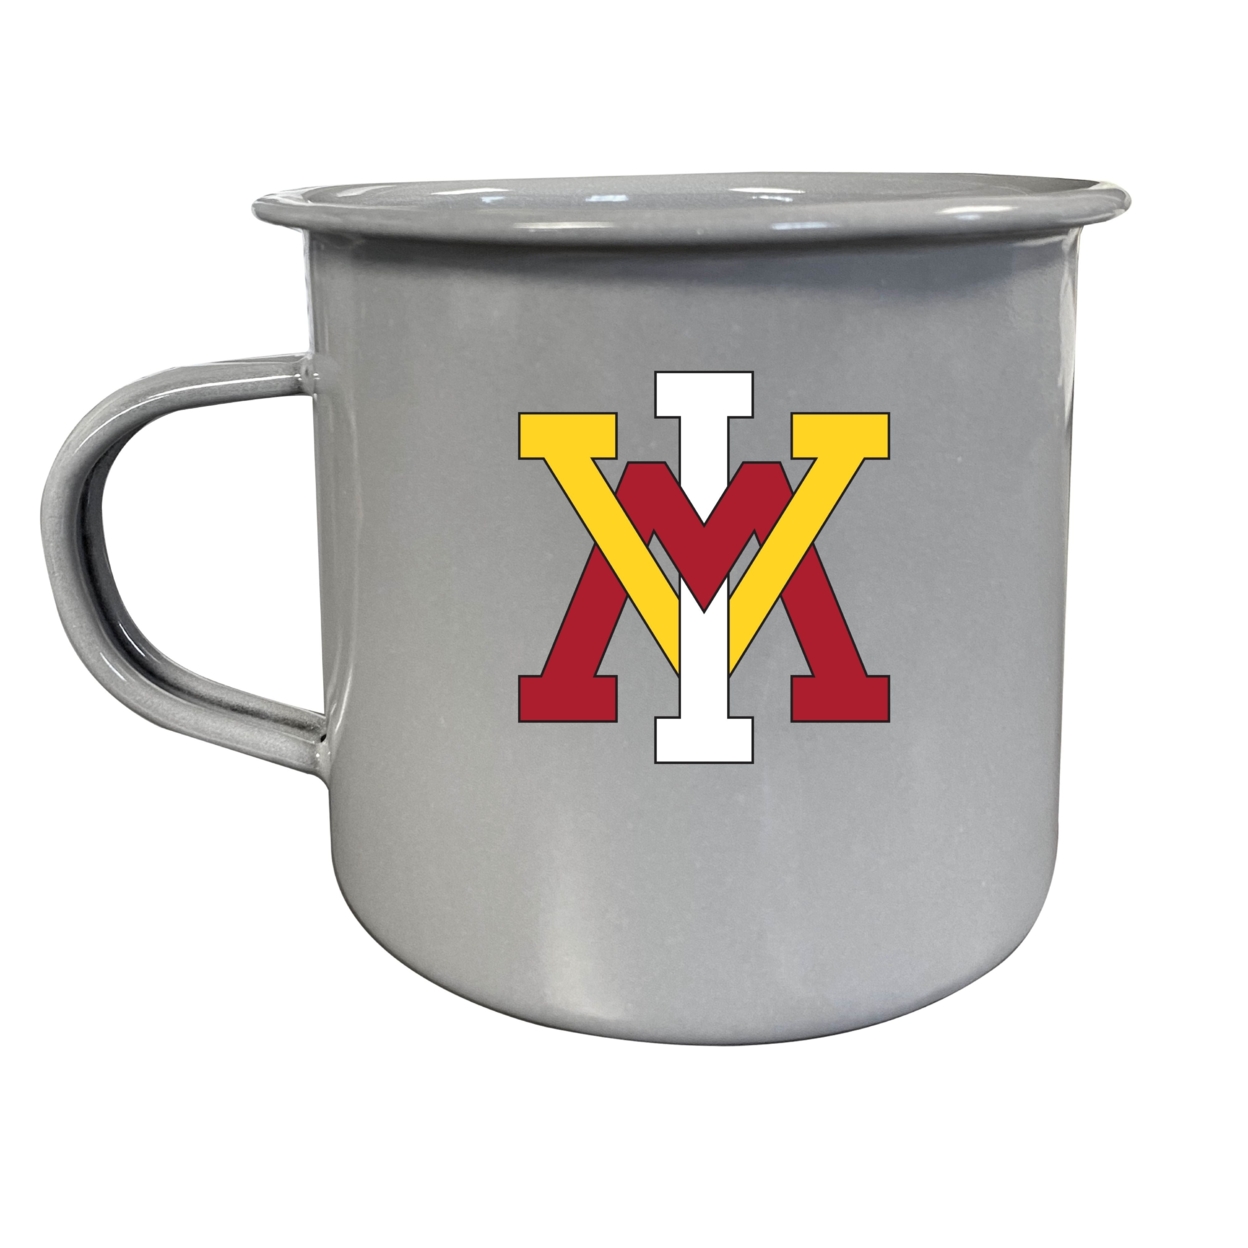 VMI Keydets Tin Camper Coffee Mug - Choose Your Color - Gray